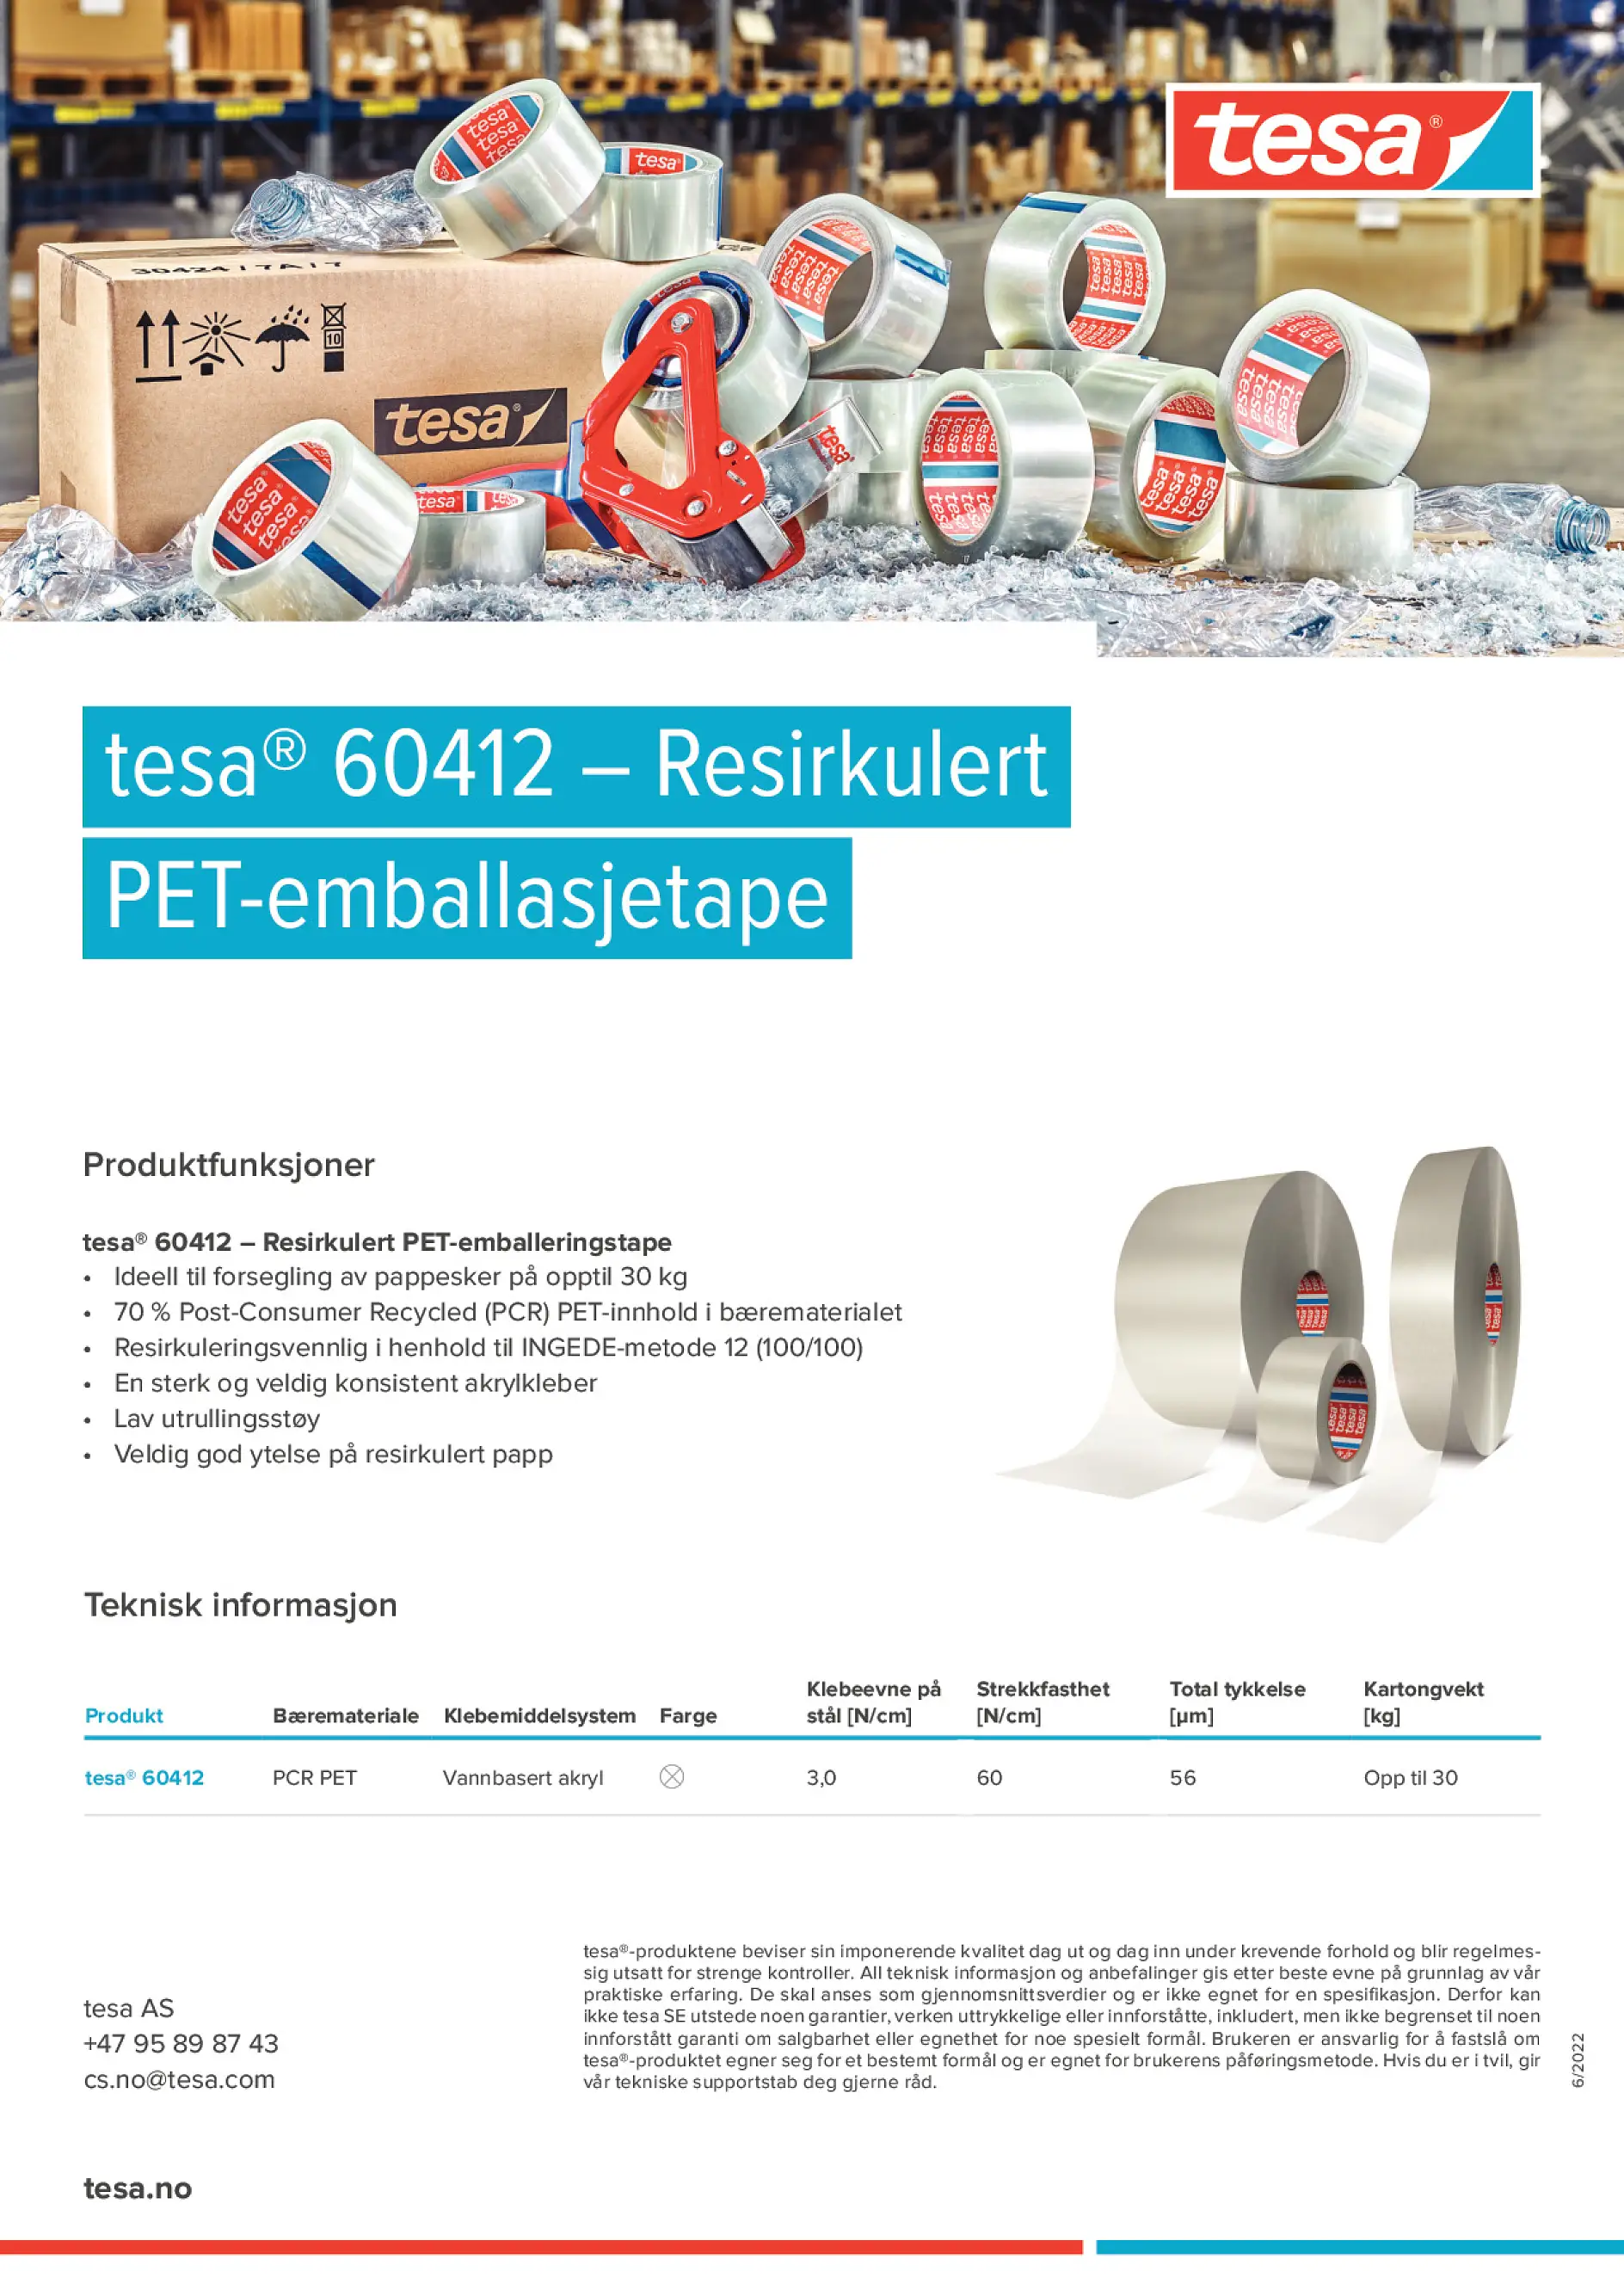 tesa® 60412 – Resirkulert PET-emballasjetape flyer